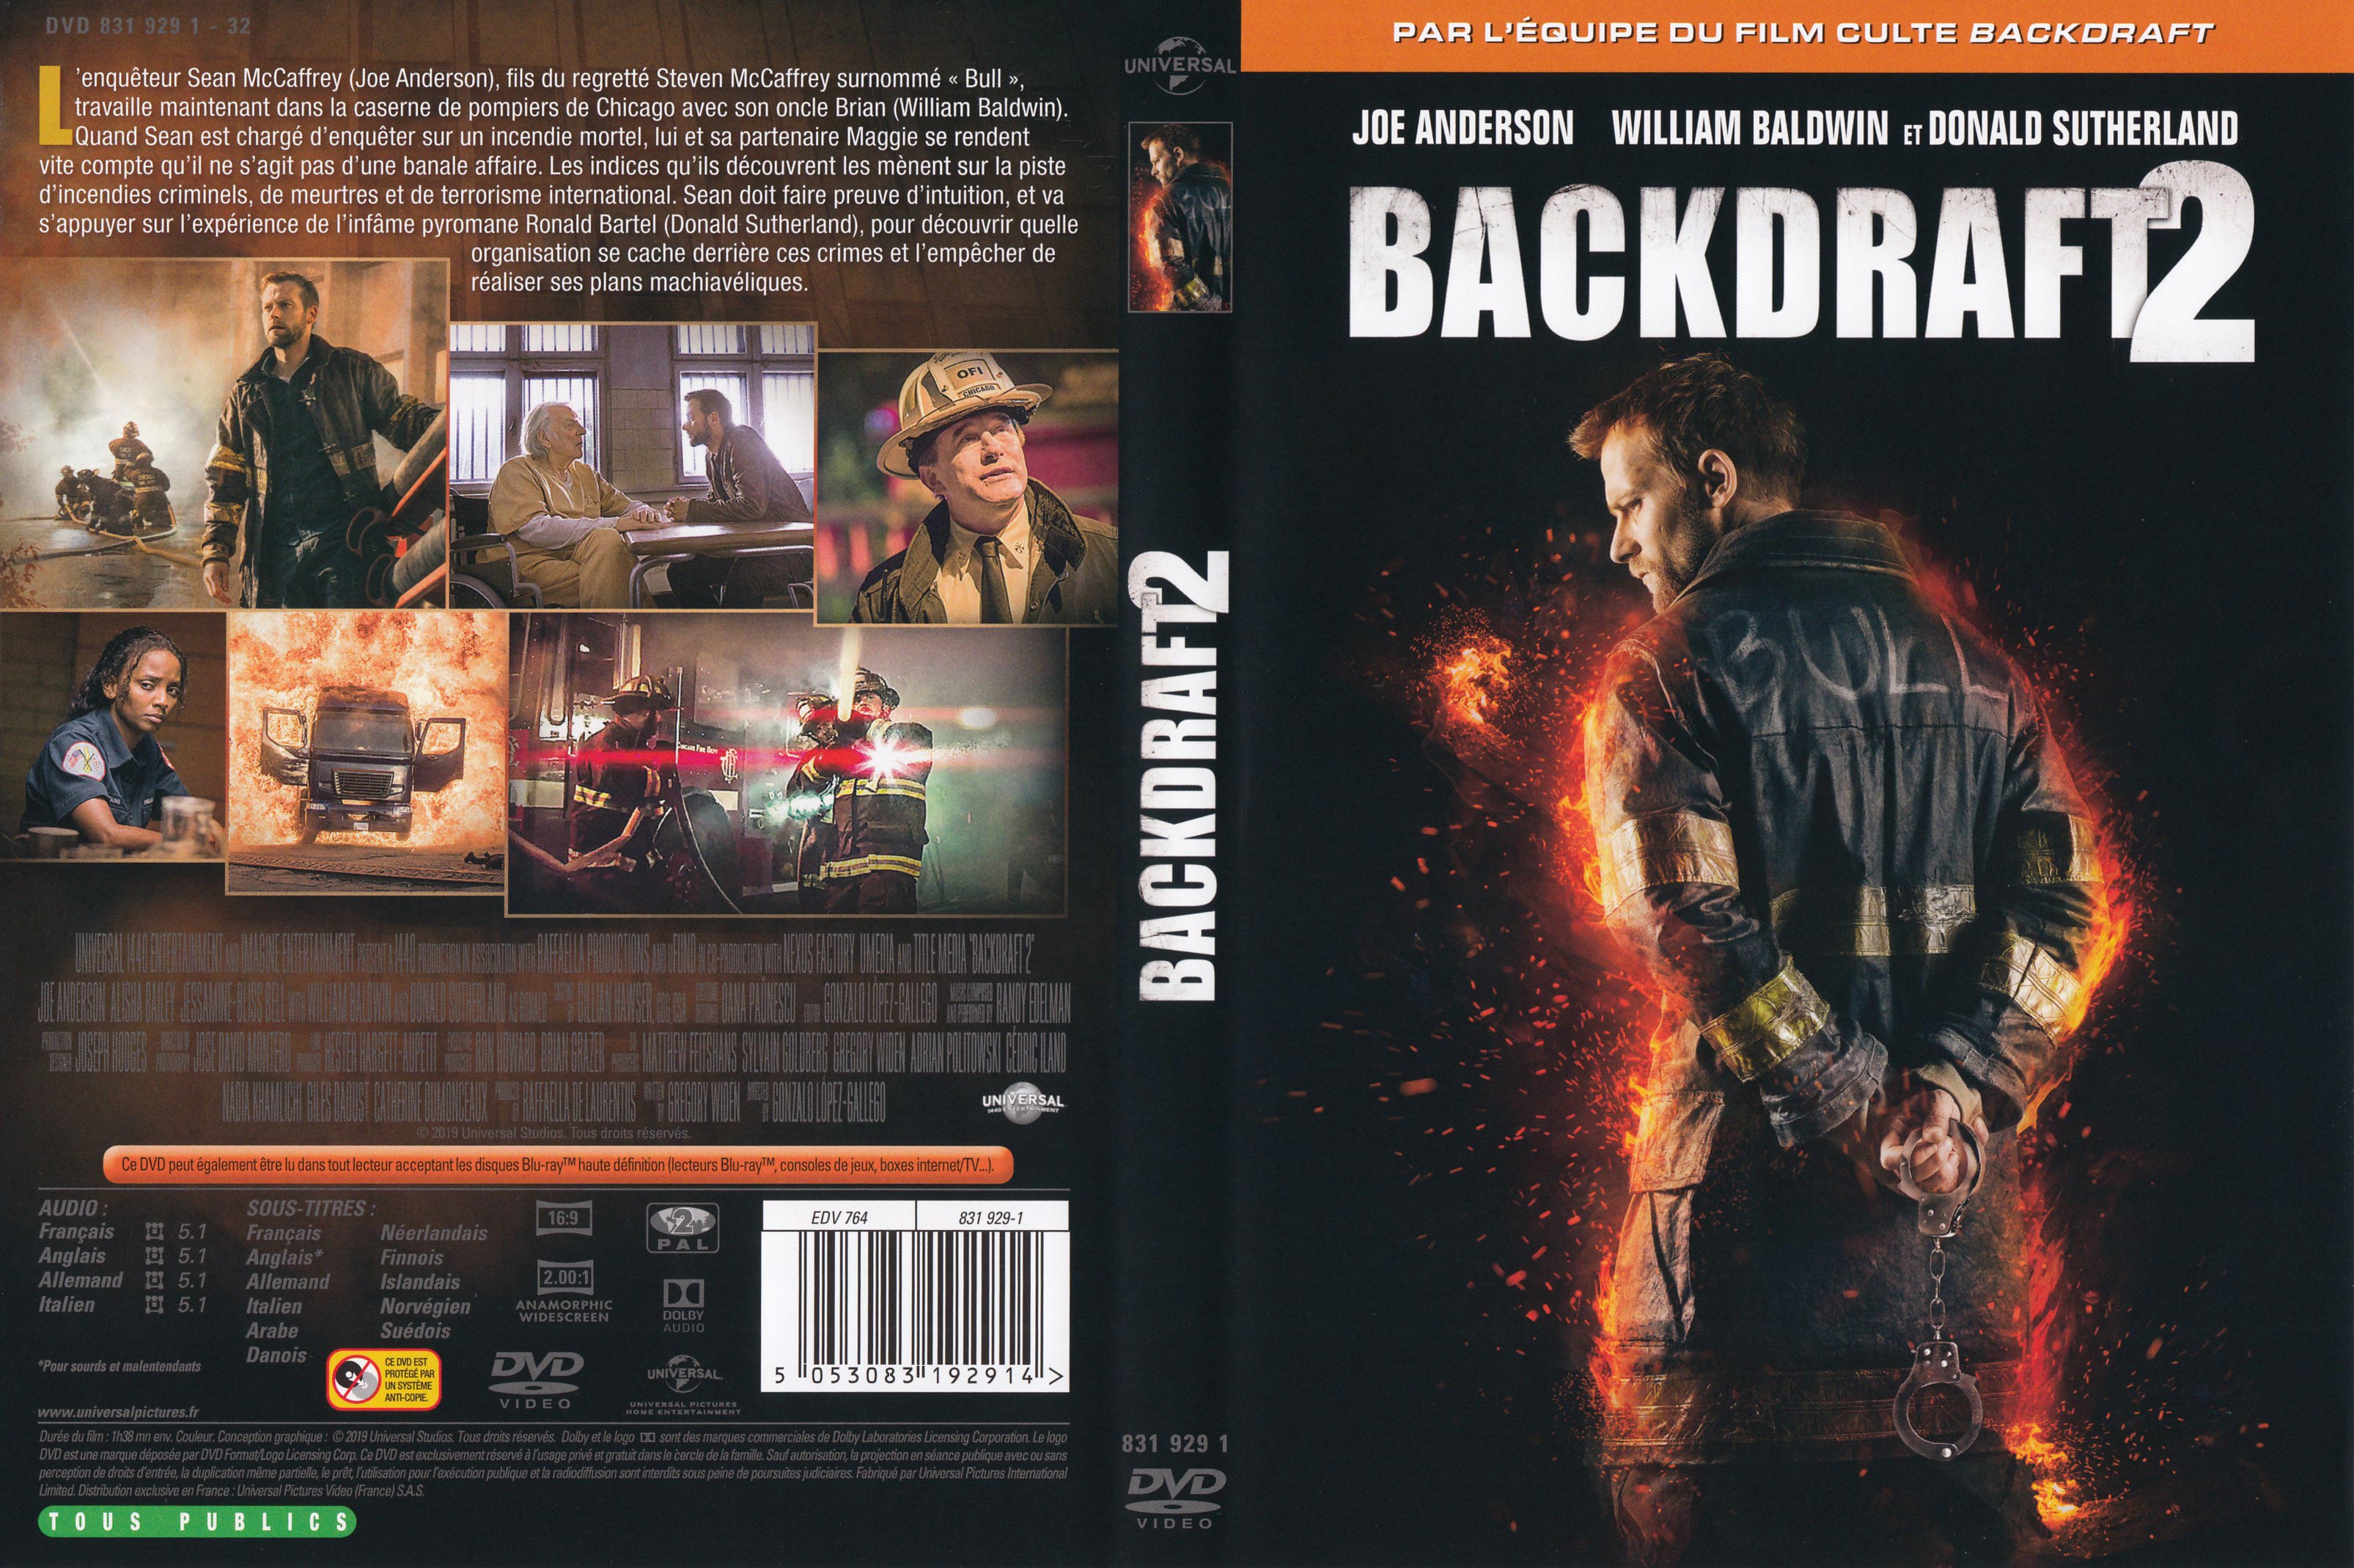 Jaquette DVD Backdraft 2